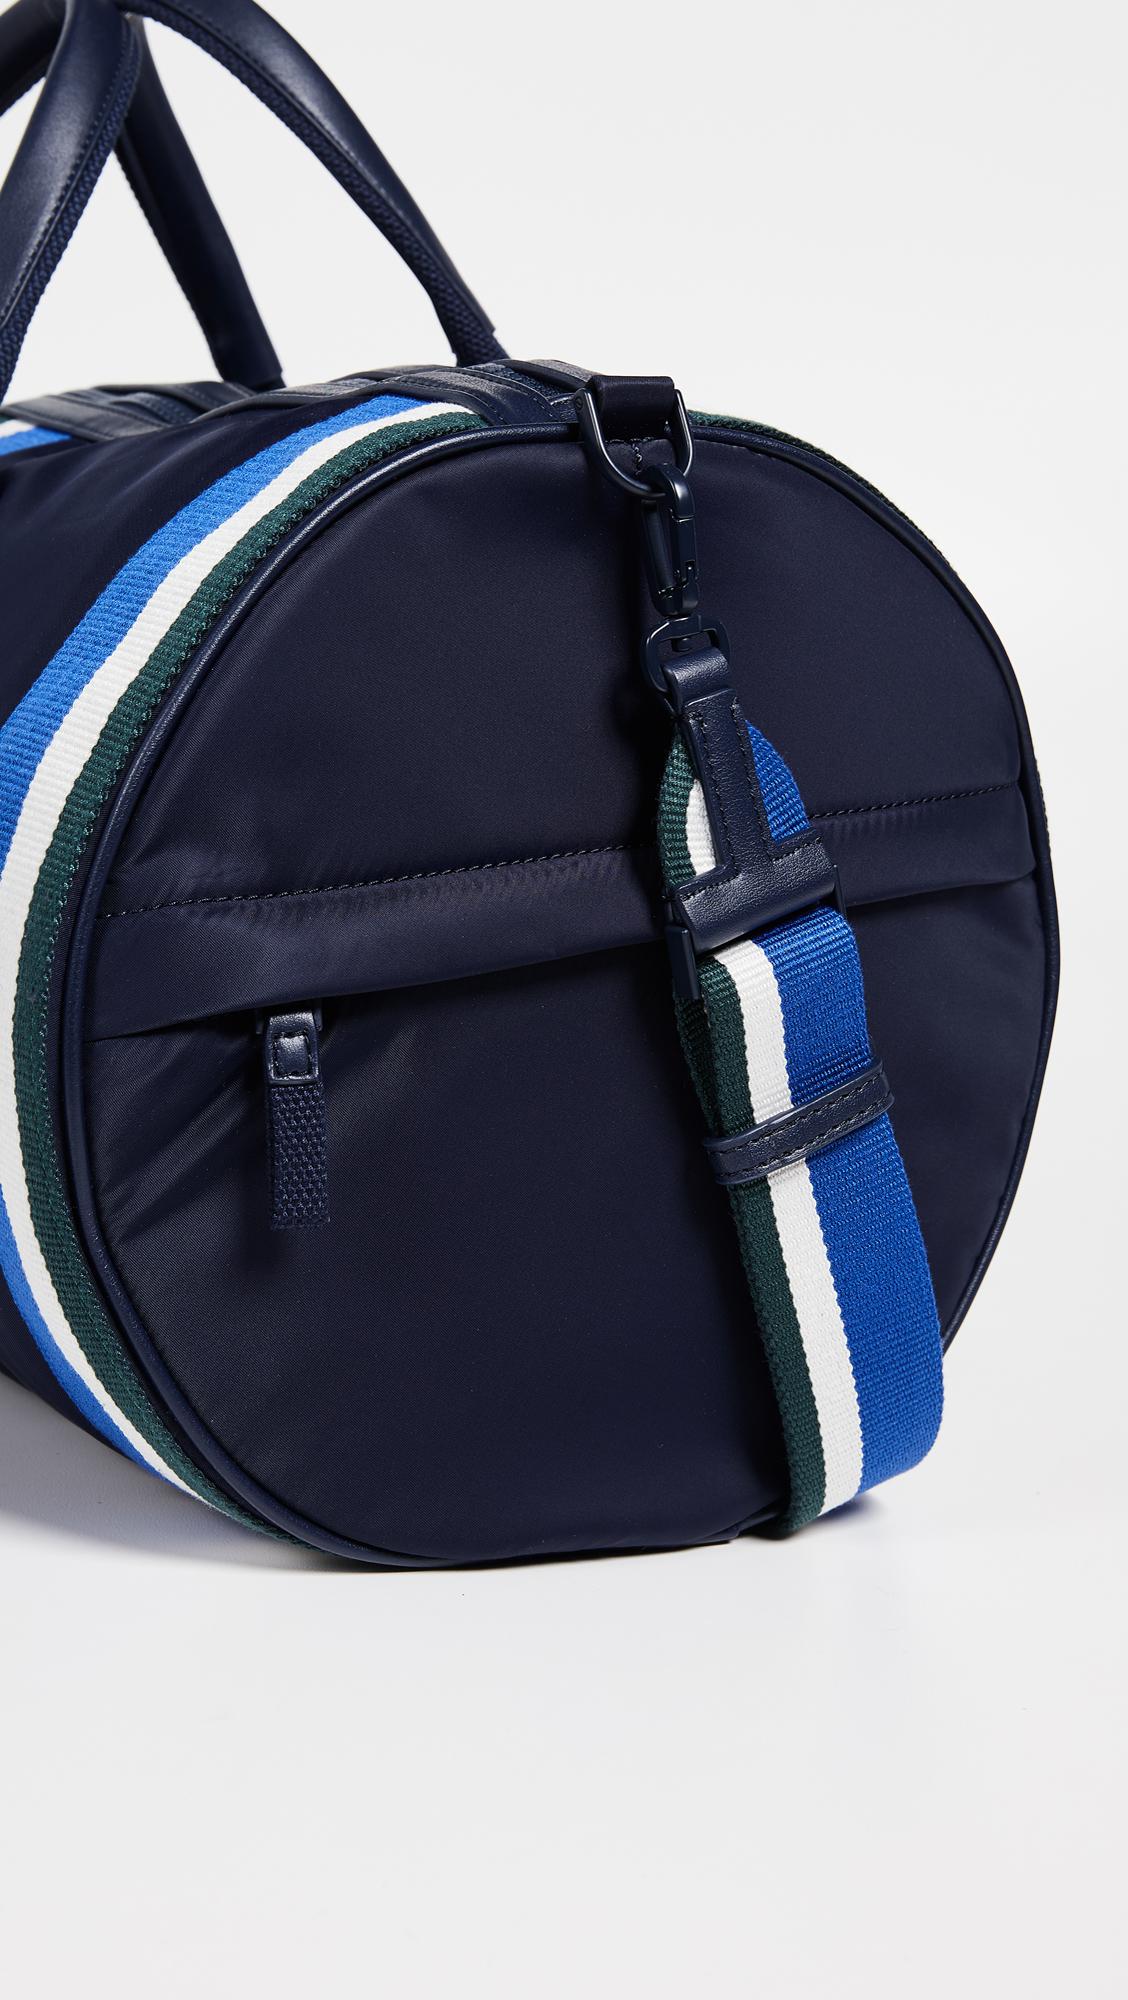 Tory Sport Canvas Retro Striped Weekender Duffel Bag in Blue - Lyst